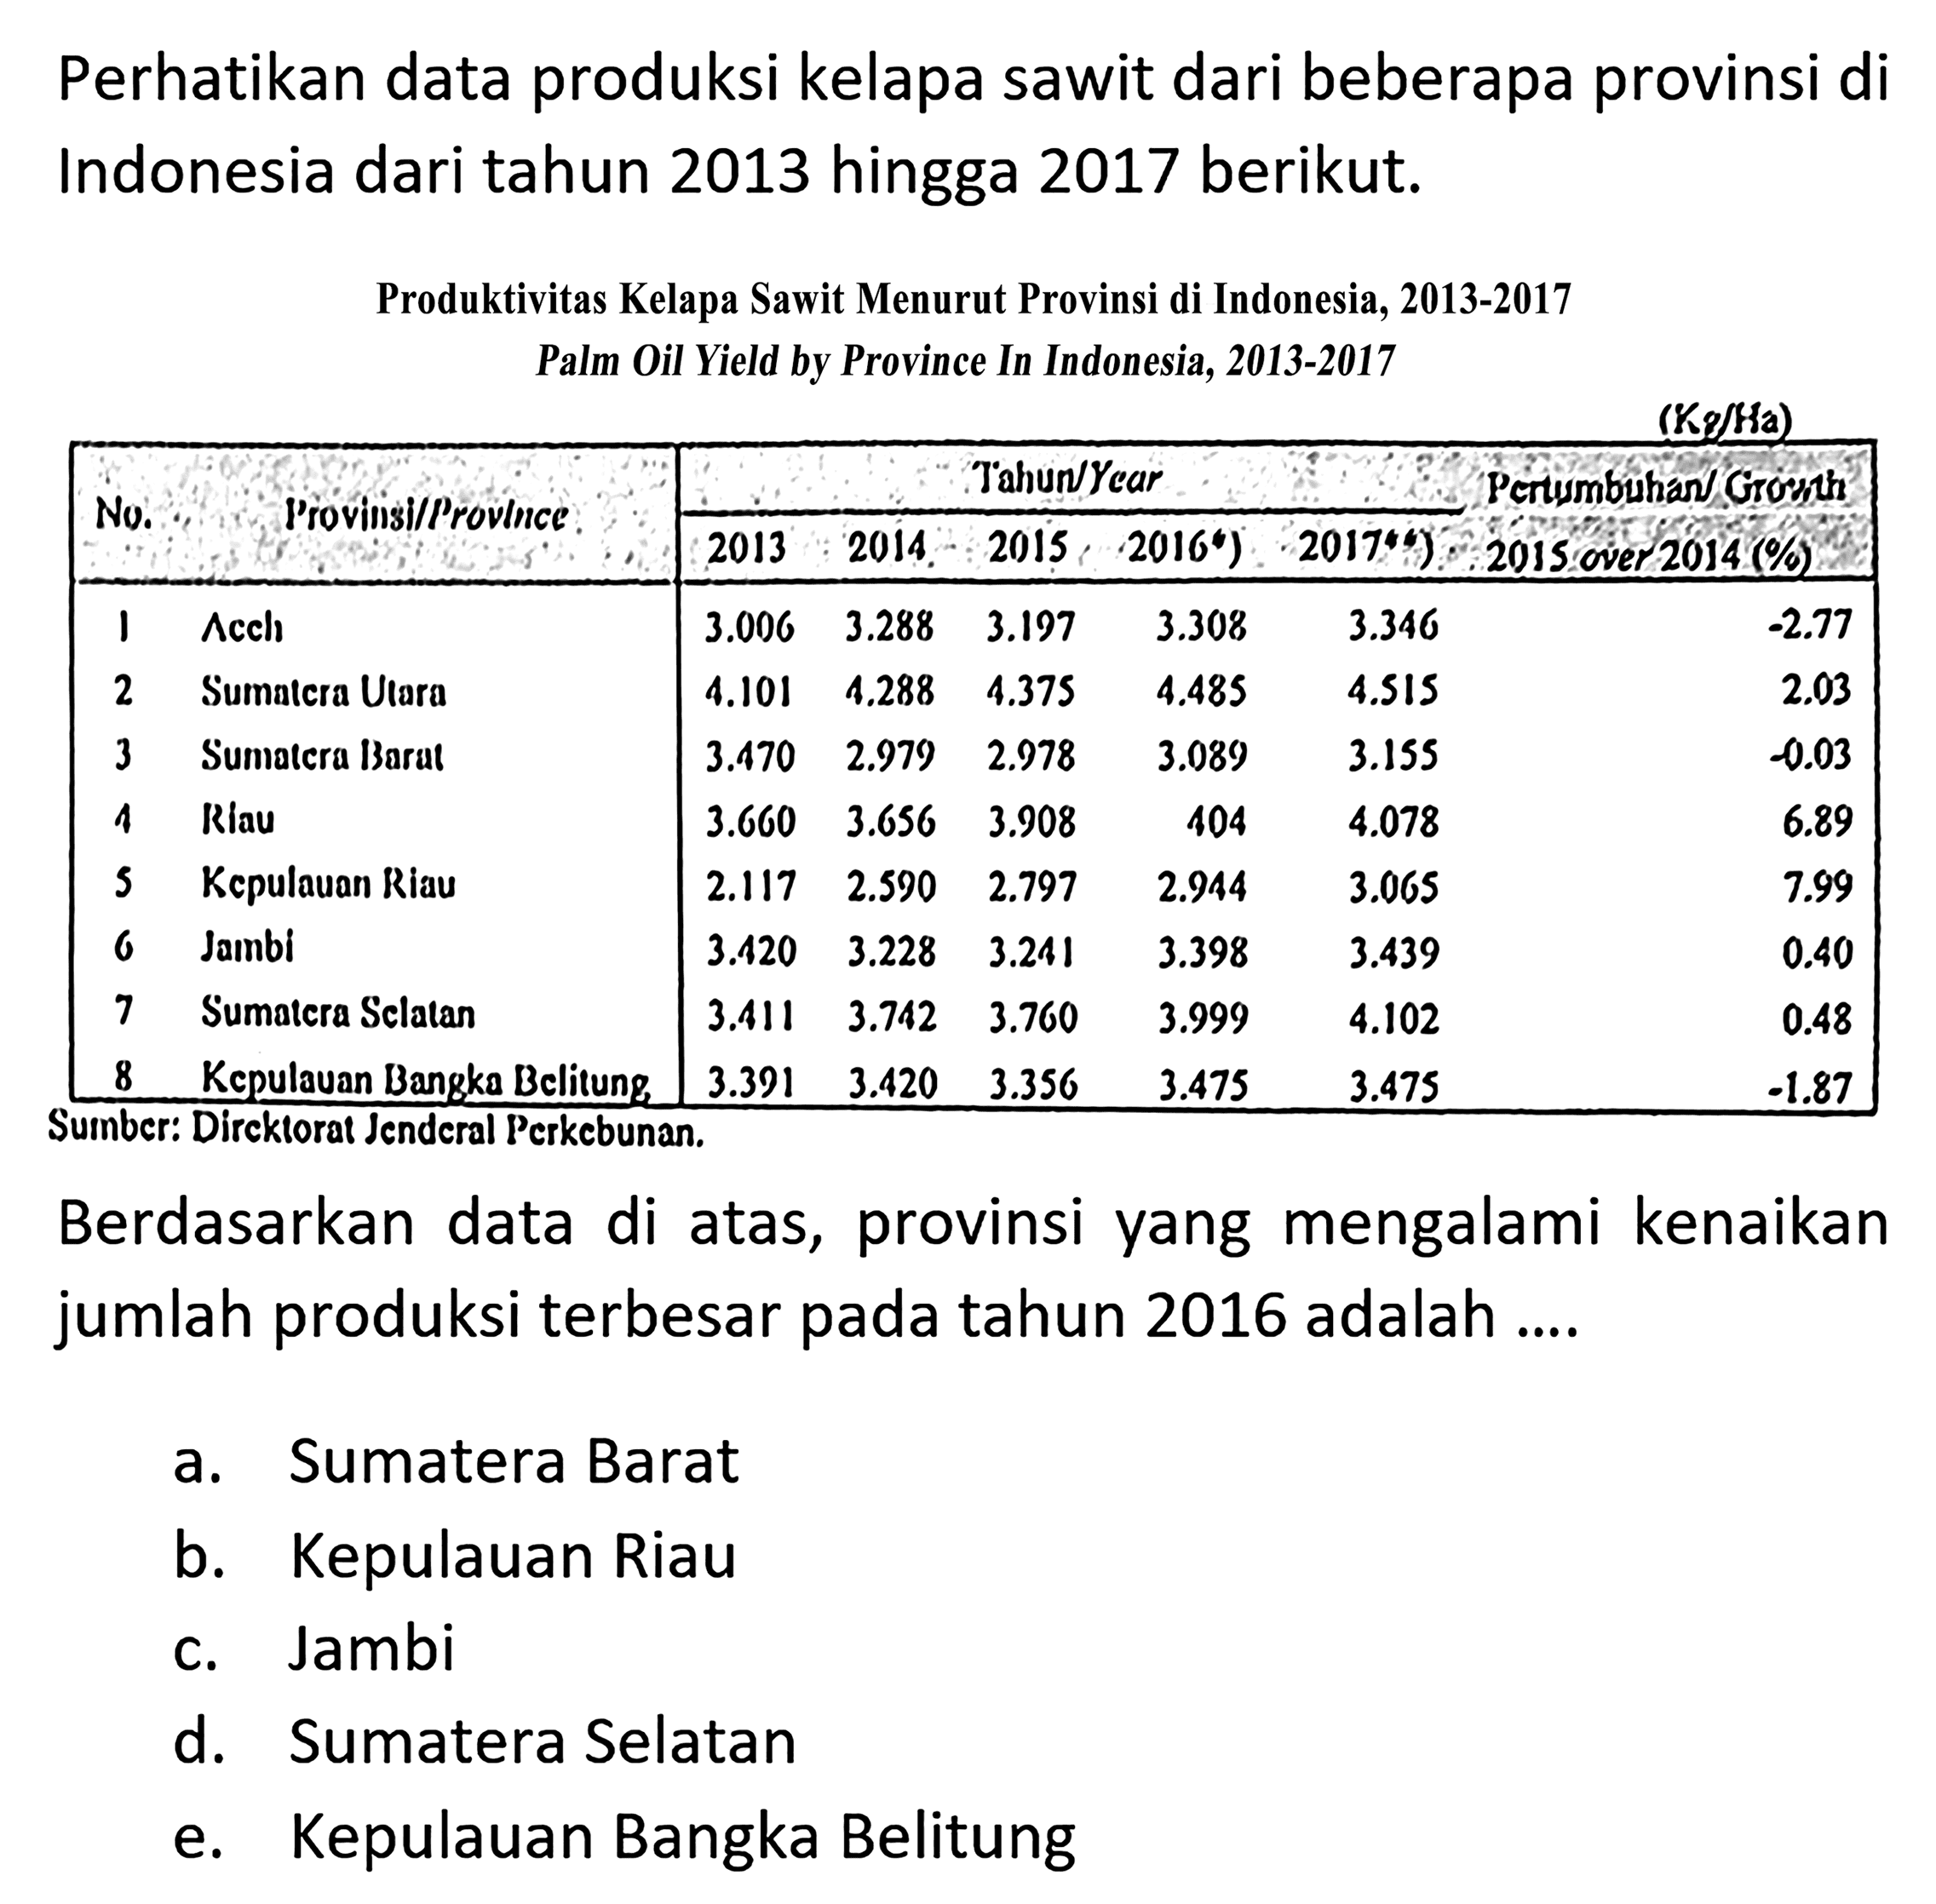 Perhatikan data produksi kelapa sawit dari beberapa provinsi di Indonesia dari tahun 2013 hingga 2017 berikut. Produktivitas Kelapa Sawit Menurut Provinsi di Indonesia, 2013-2017 Palm Oil Yield by Province In Indonesia, 2013-2017 No. Provinsi/Province Tahun/Year 2013 2014 2015 2016*) 2017**) Pertumbuhan/Growth 2015 over 2014 (%) 1 Aceh 3.006 3.288 3.197 3.308 3.346 -2.77 2 Sumatera Utara 4.101 4.288 4.375 4.485 4.515 2.03 3 Sumatera Barat 3.470 2.979 2.978 3.089 3.155 -0.03 4 Riau 3.660 3.656 3.908 404 4.078 6.89 5 Kepulauan Riau 2.117 2.590 2.797 2.944 3.065 7.99 6 Jambi 3.420 3.228 3.241 3.398 3.439 0.40 7 Sumatera Selatan 3.411 3.742 3.760 3.999 4.102 0.48 8 Kepulauan Bangka Belitung 3.391 3.420 3.356 3.475 3.475 -1.87 Sumber: Direktorat Jenderal Perkebunan. Berdasarkan data di atas, provinsi yang mengalami kenaikan jumlah produksi terbesar pada tahun 2016 adalah ...